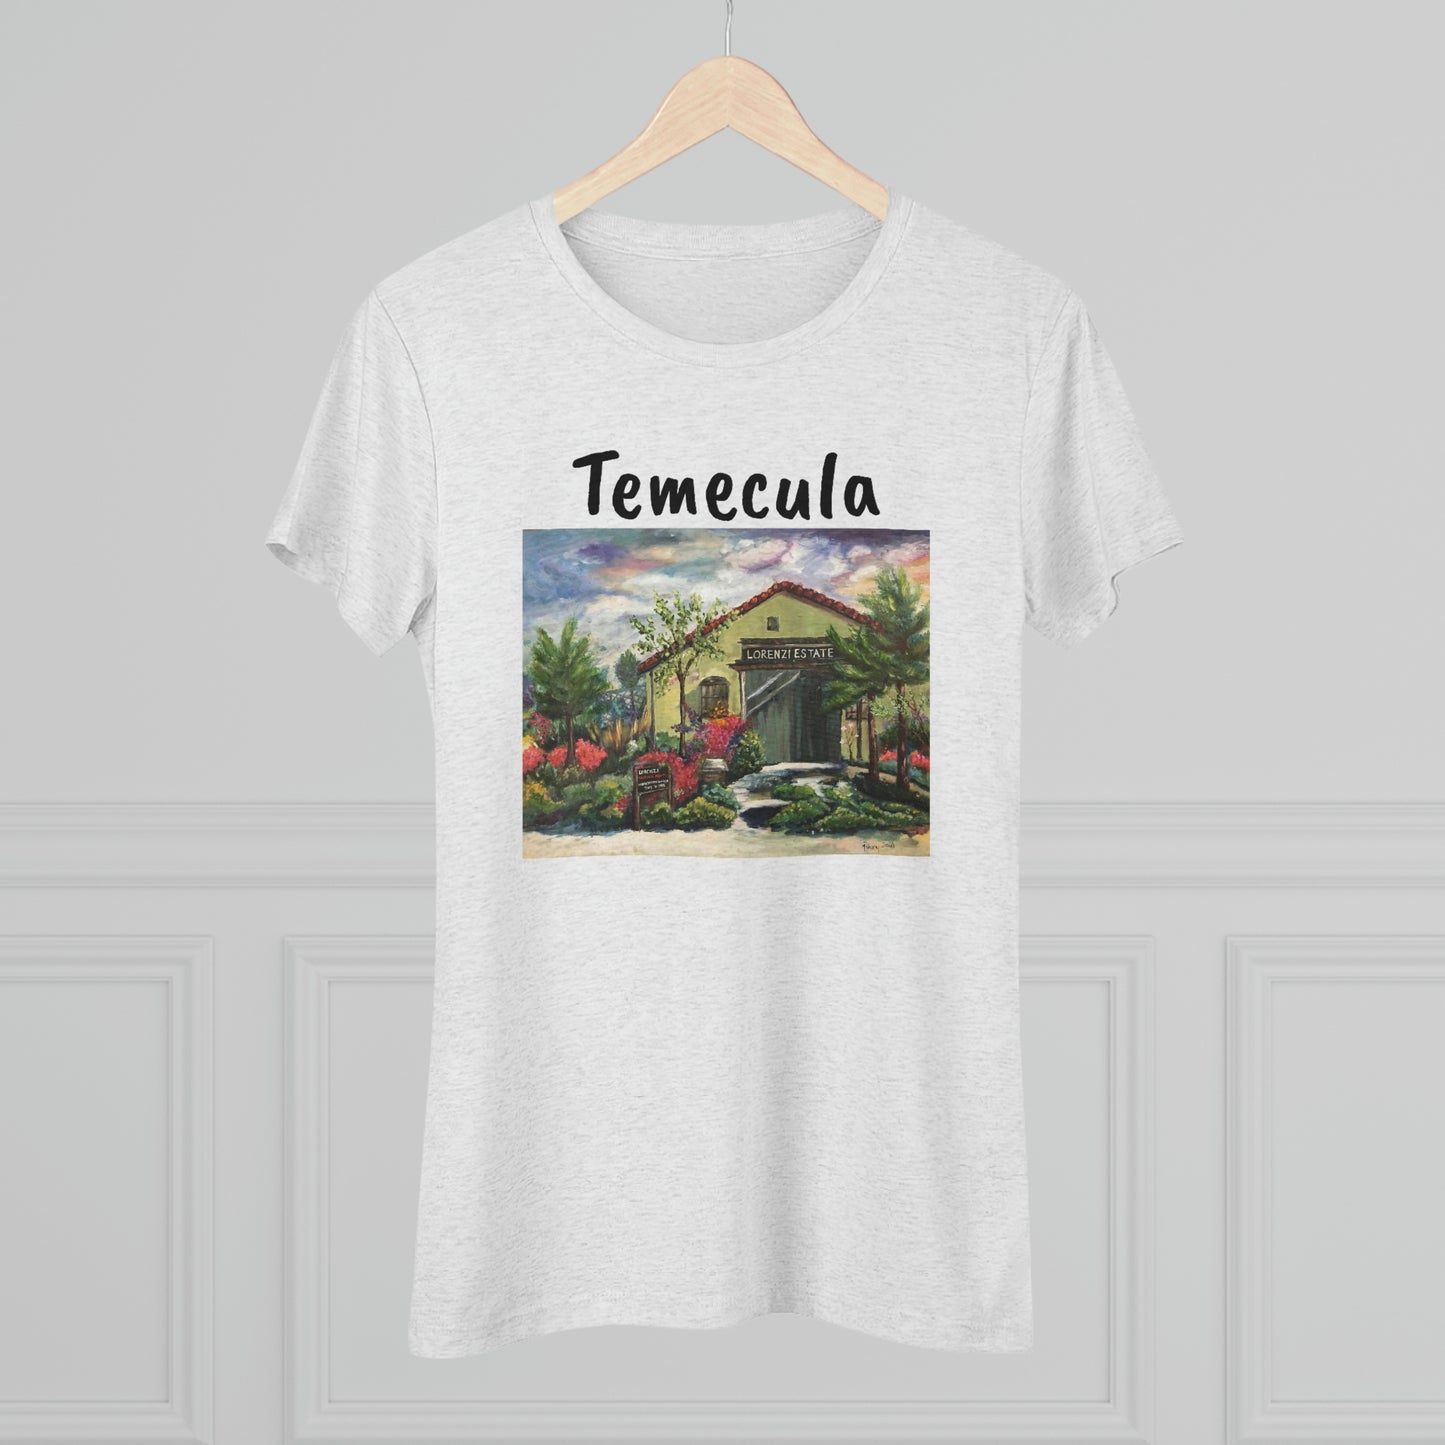 Lorenzi Estate Wines Temecula Camiseta Triblend ajustada para mujer